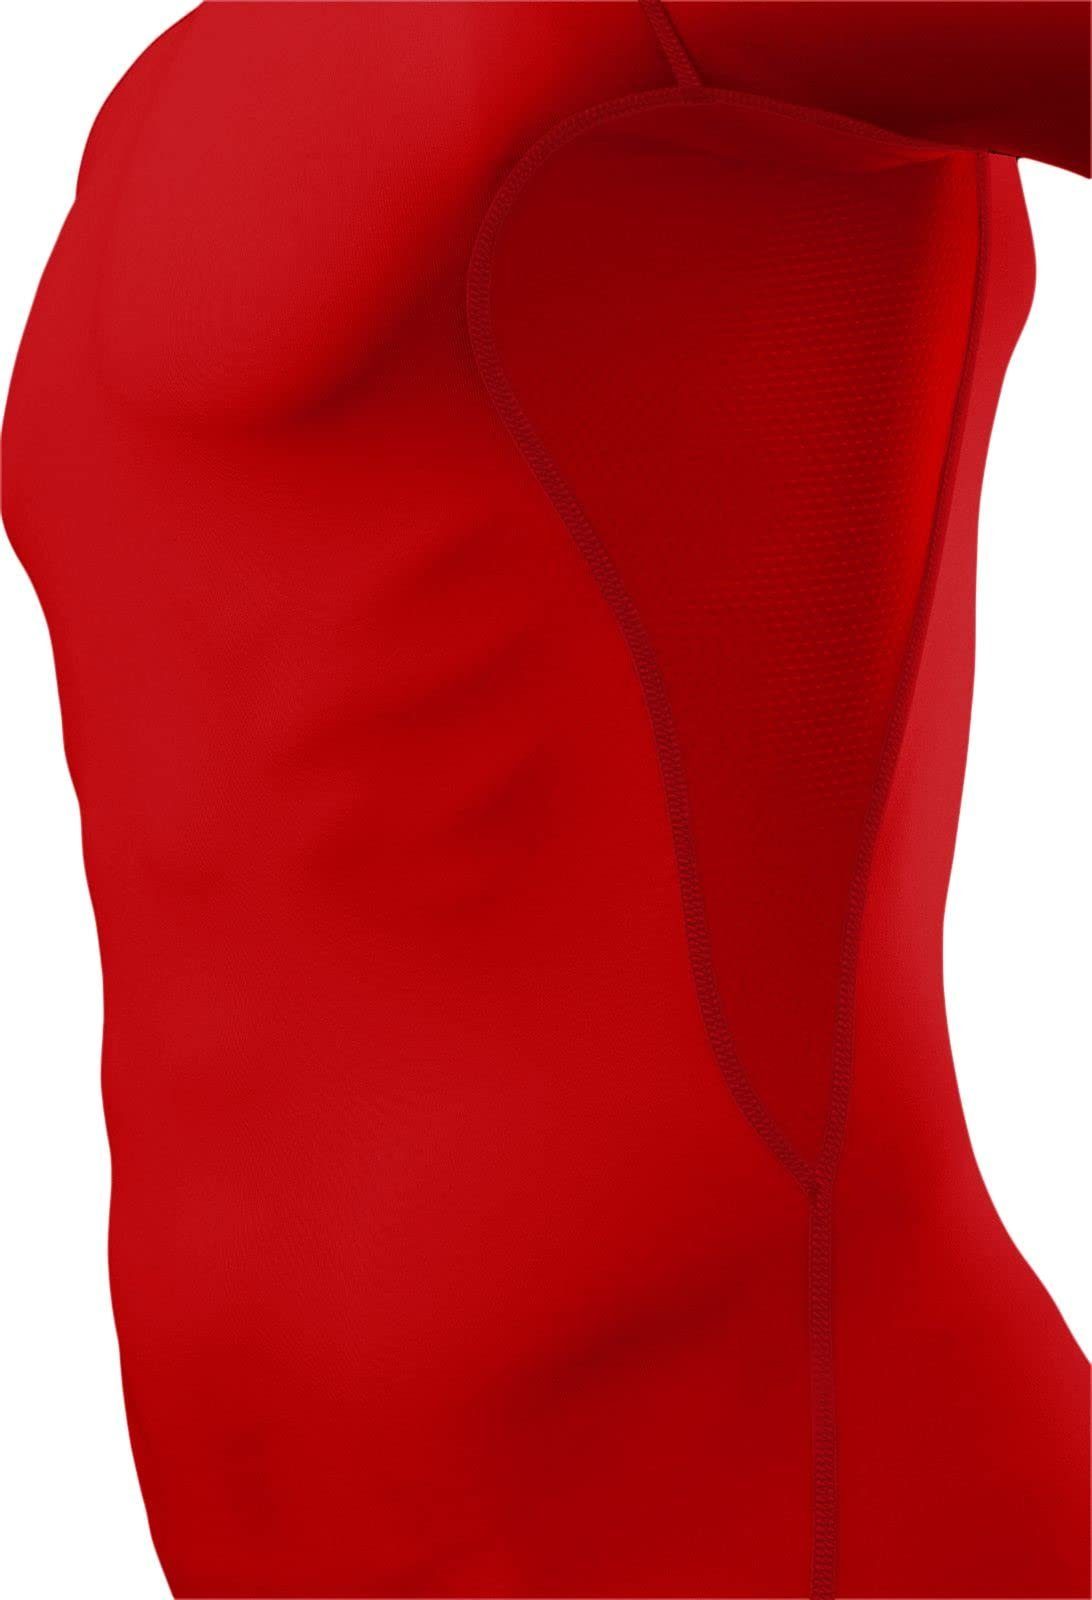 TCA Funktionsunterhemd TCA Herren kurzärmlig, - HyperFusion elastisch Rot Sportshirt